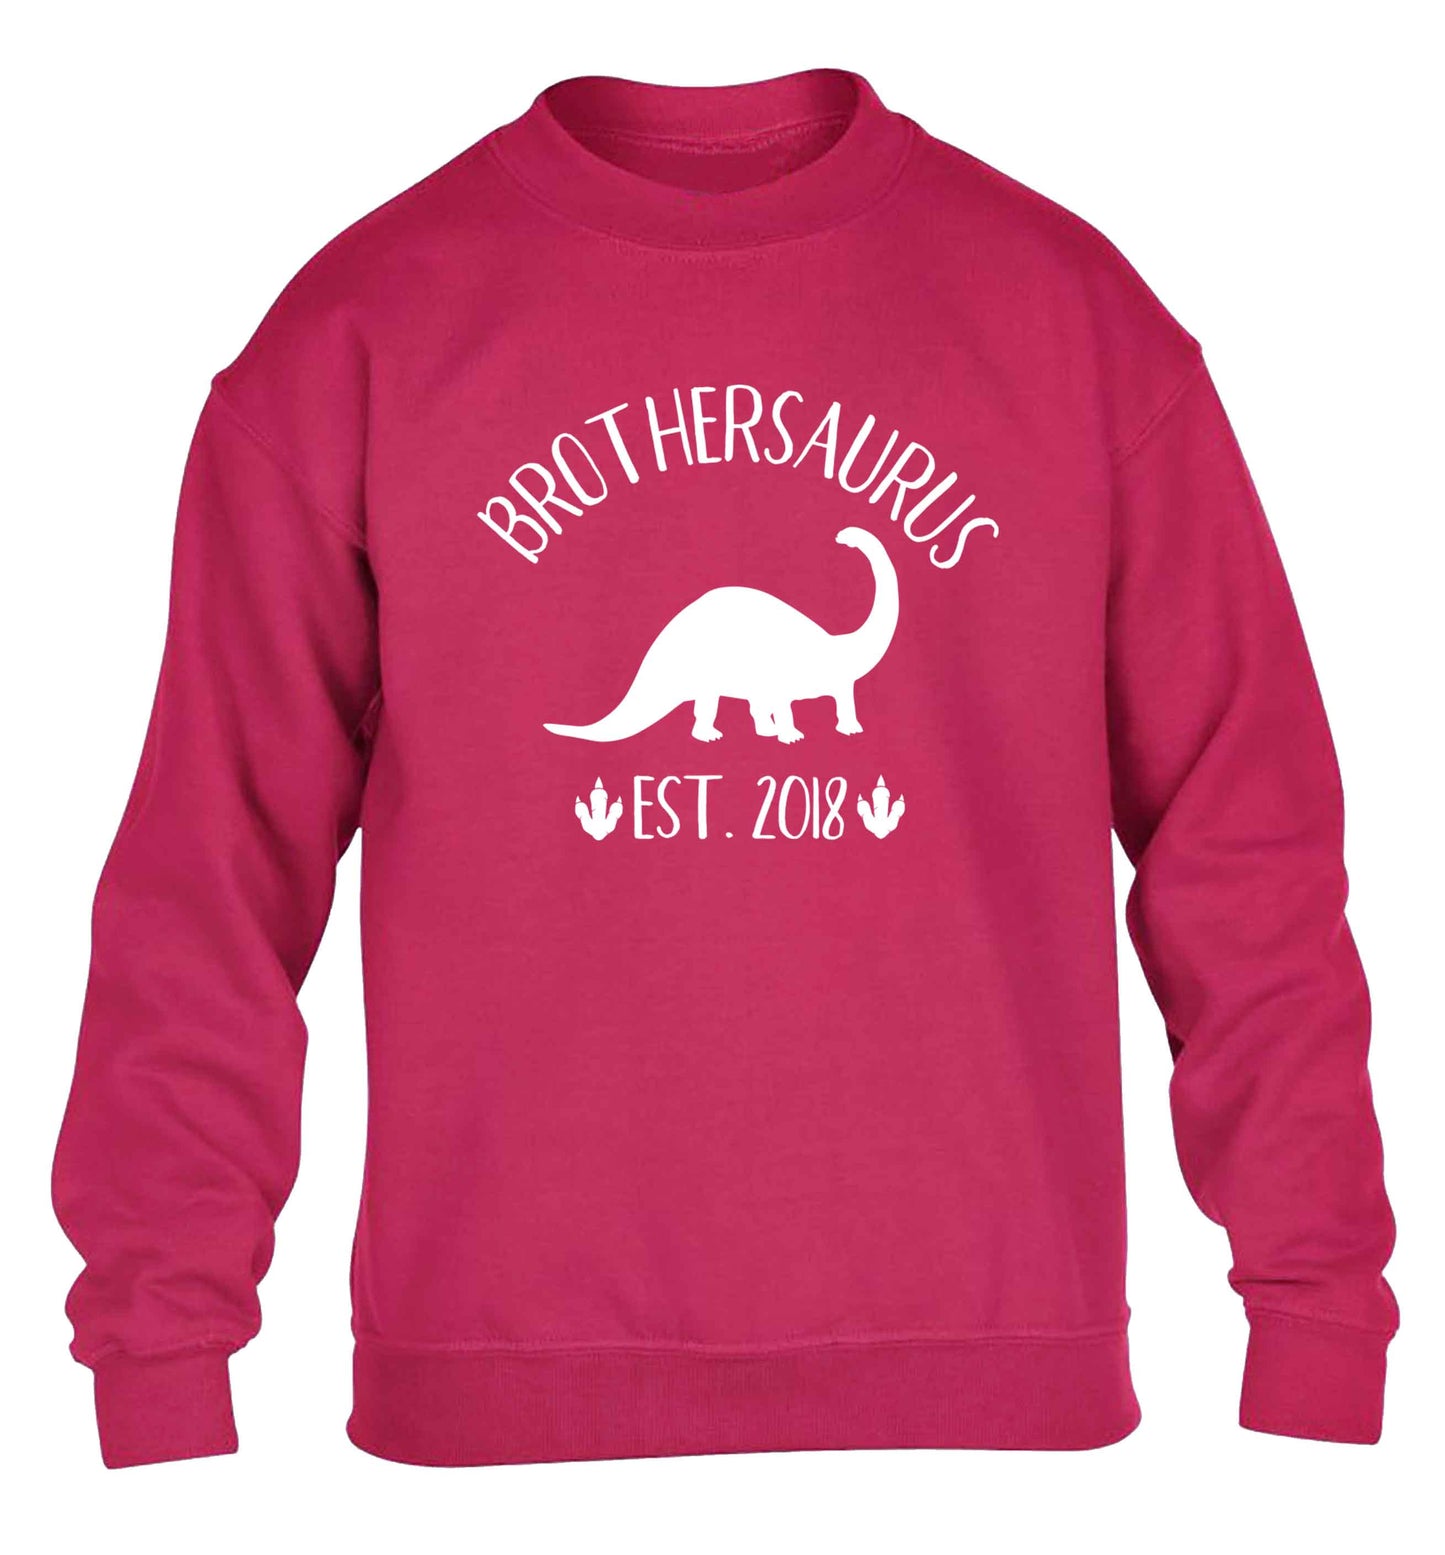 Personalised brothersaurus since (custom date) children's pink sweater 12-13 Years